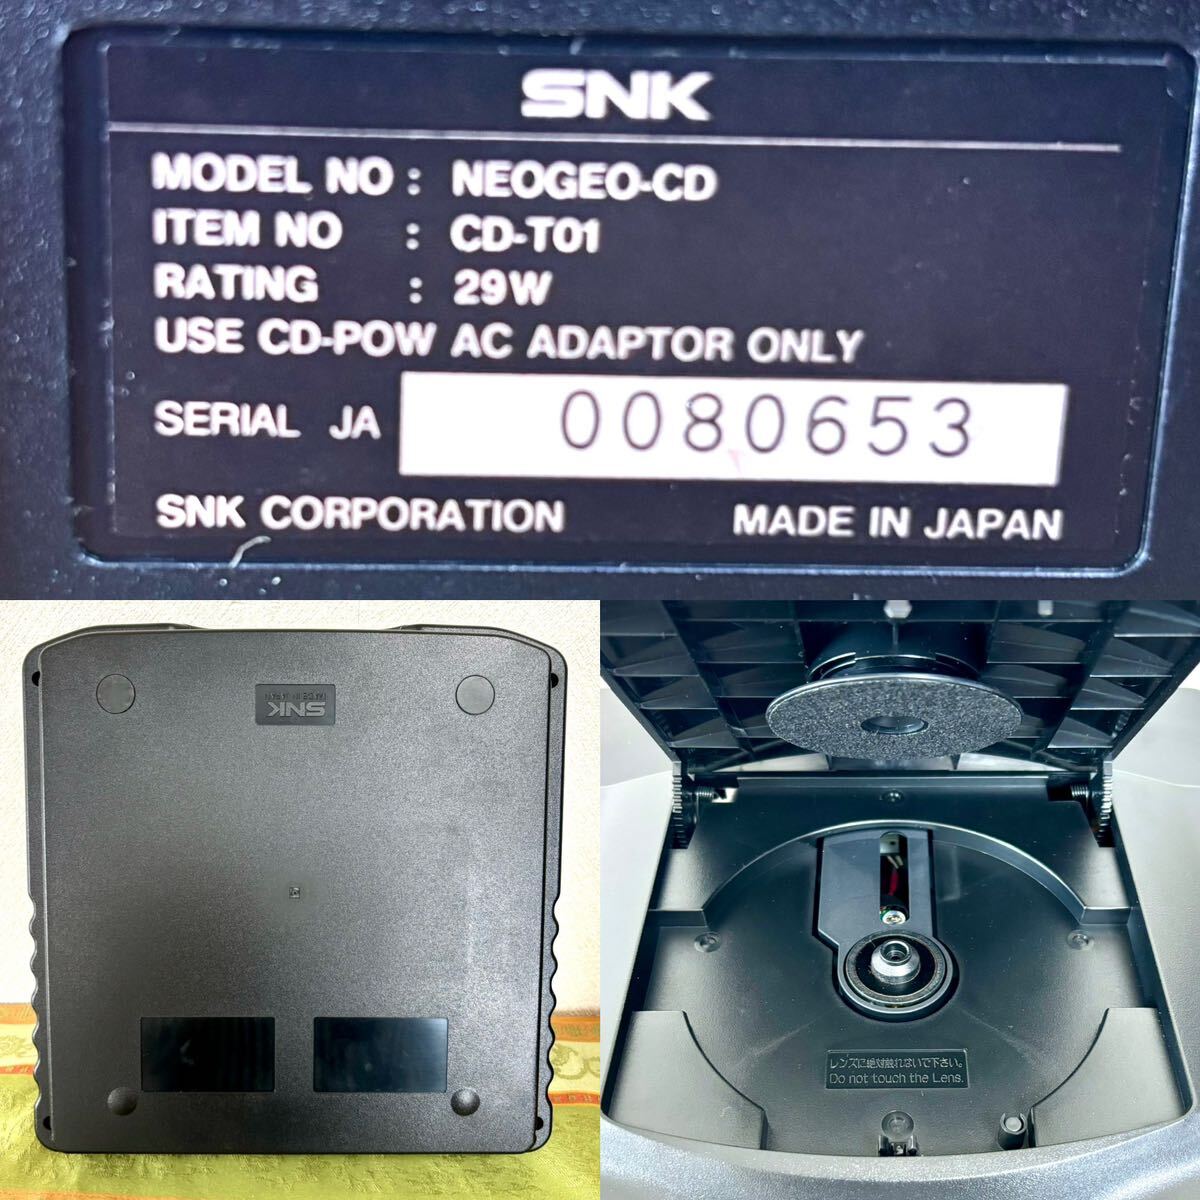 * SNK CD-T01 NEO-GEO CD корпус игра машина Neo geo esenke- работоспособность не проверялась 